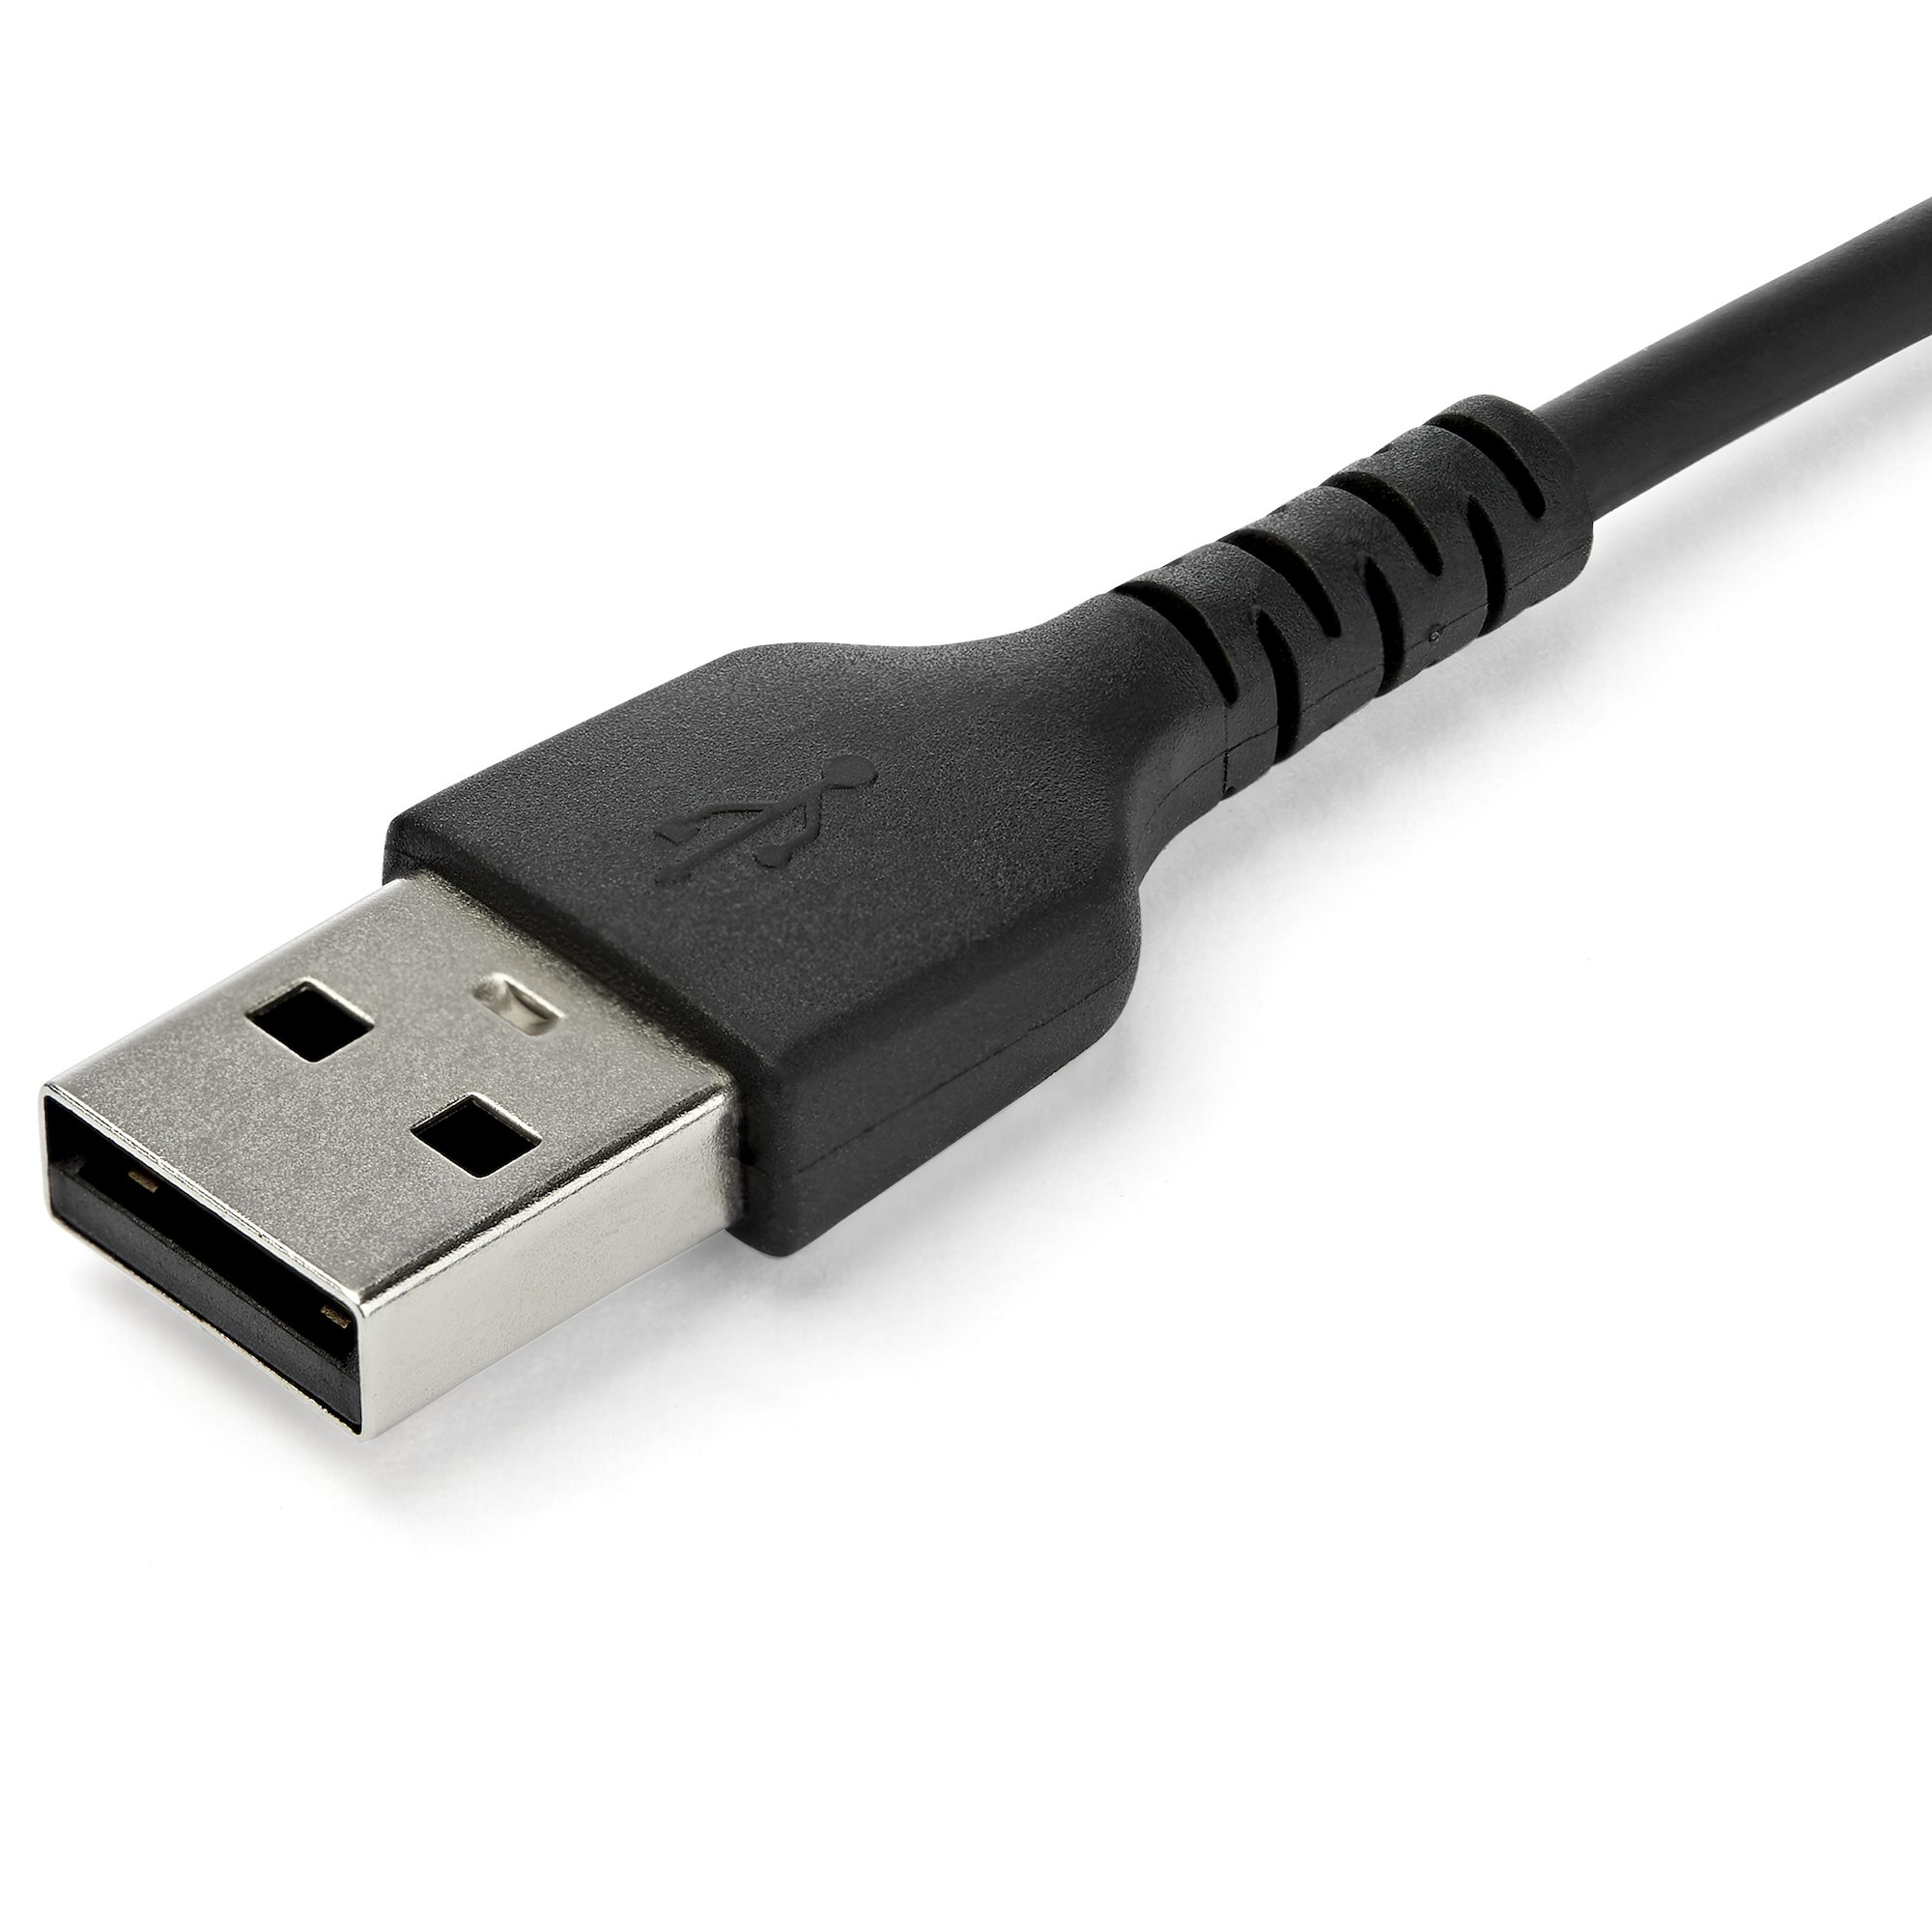 Meander blad krigerisk 1m USB A to USB C Charging Cable Durable - USB-C Cables | StarTech.com